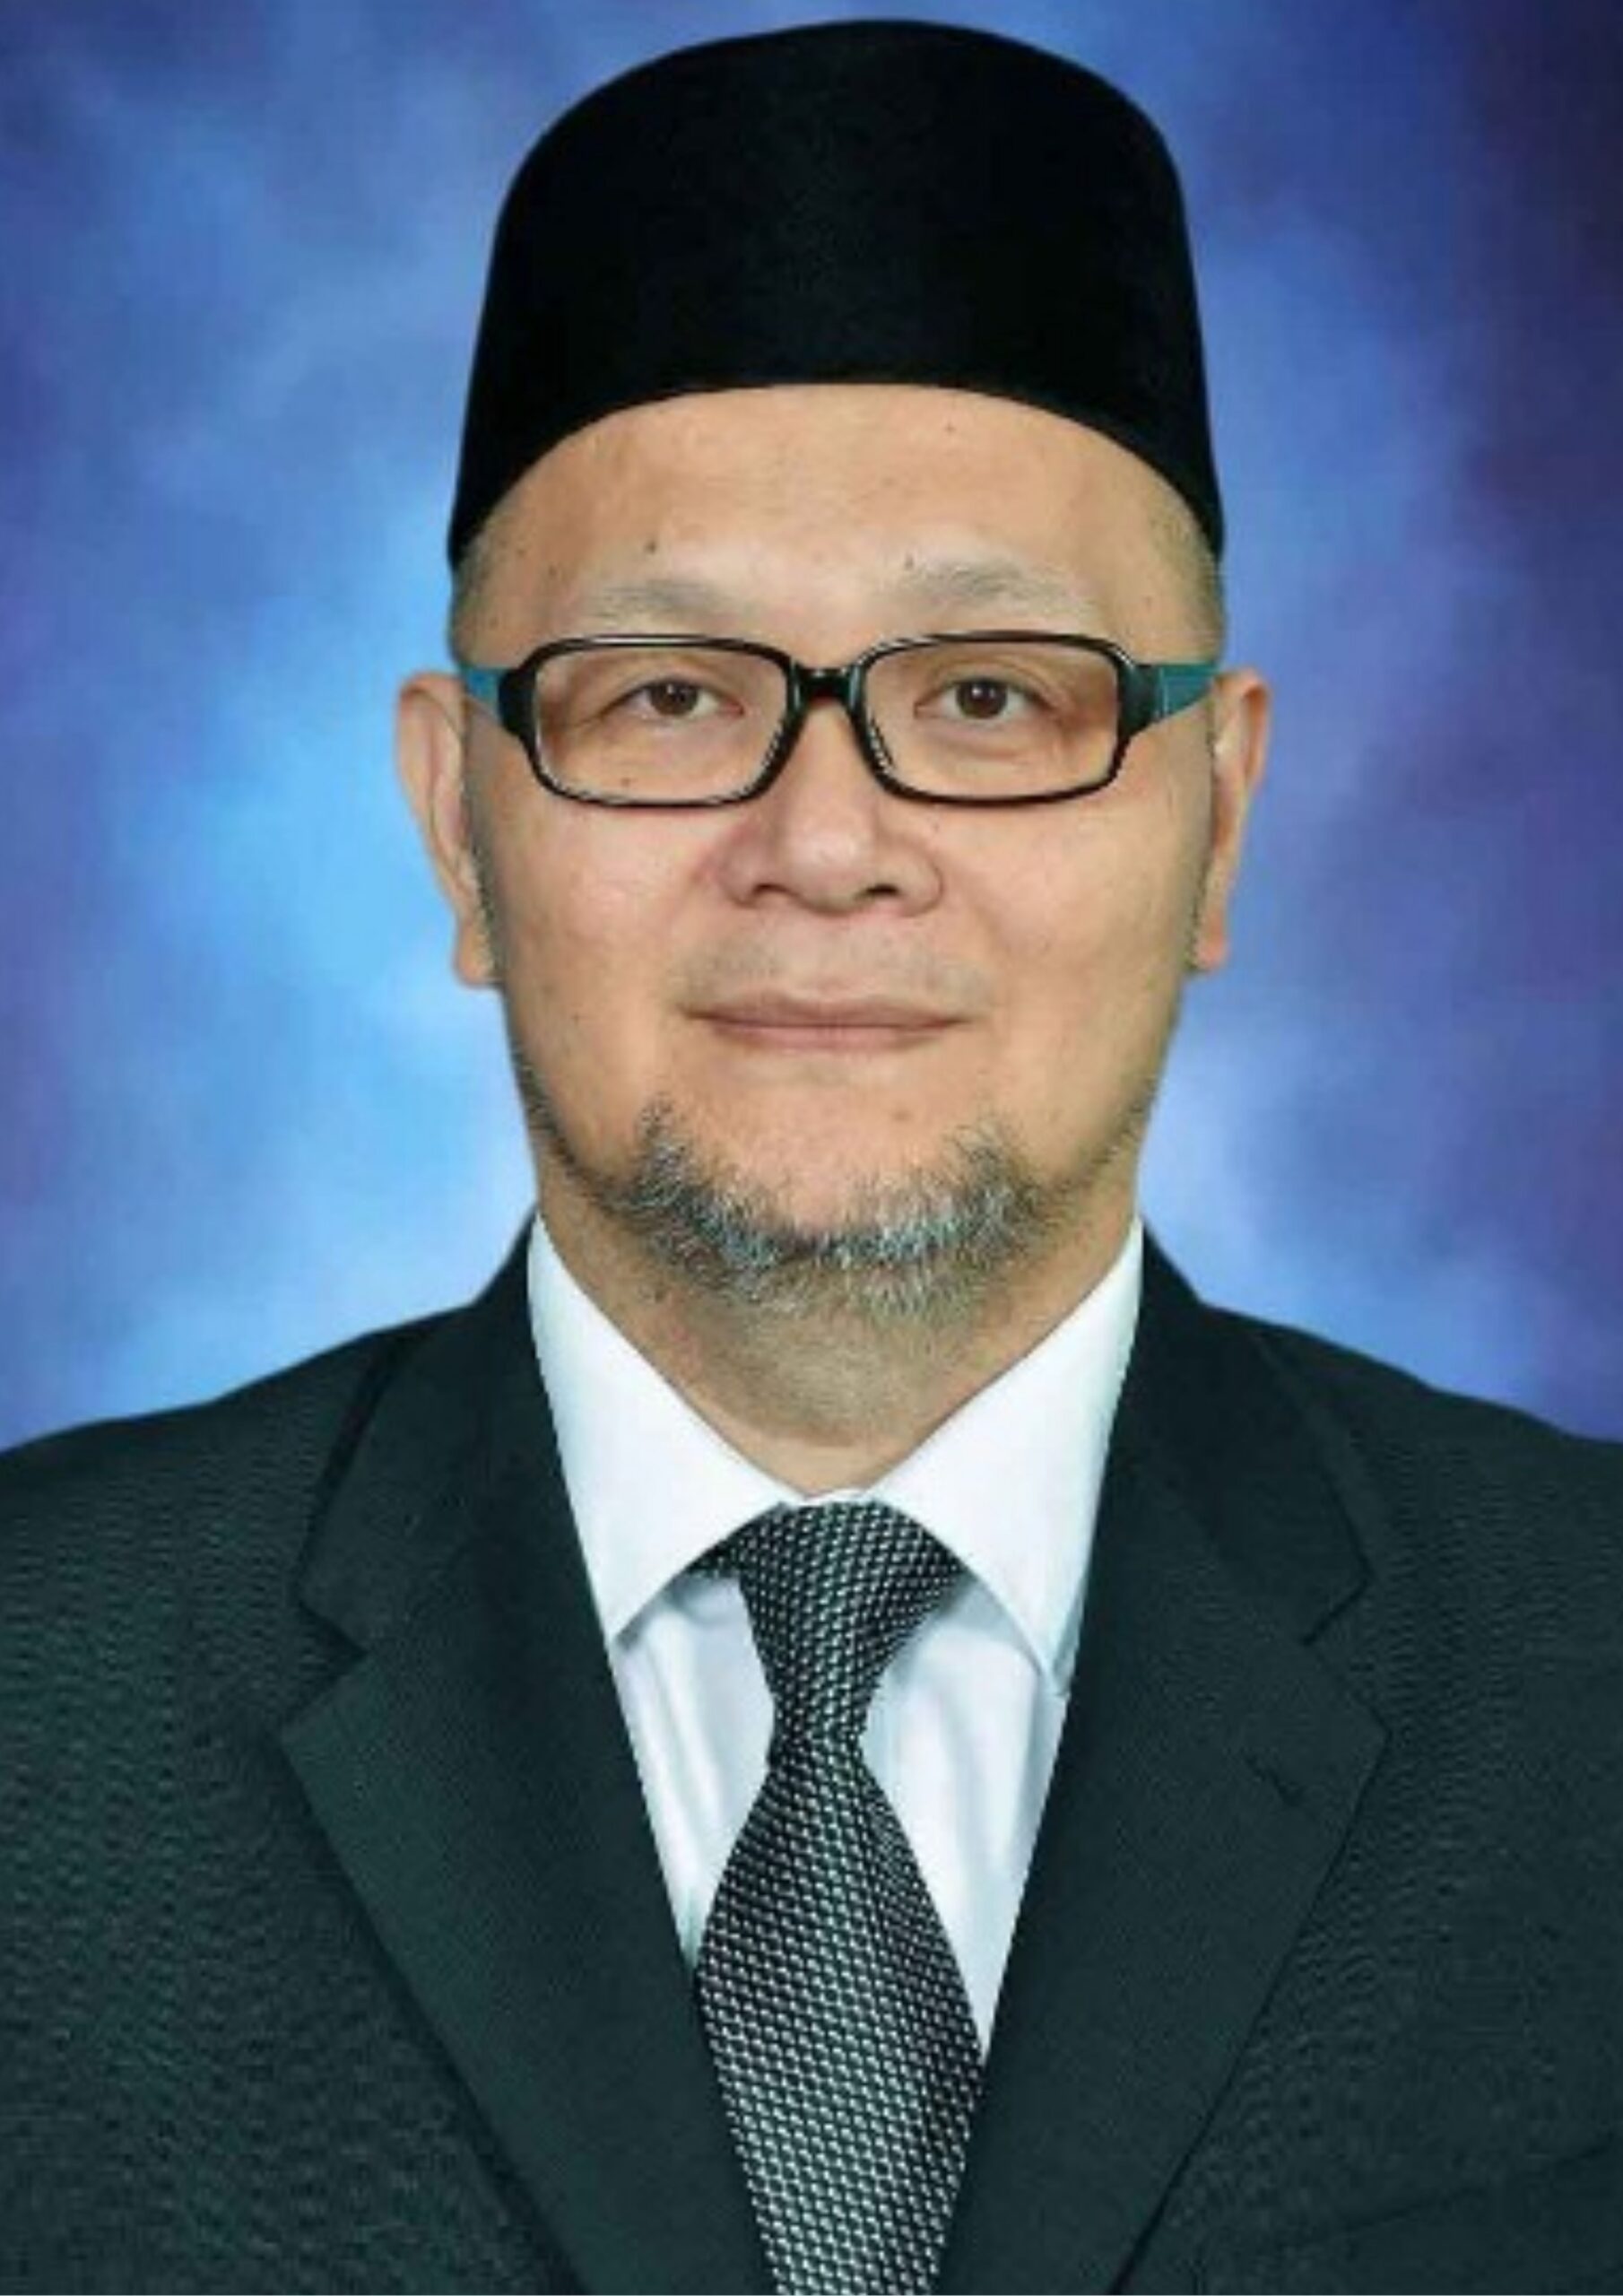 H E Dato Seri Setia Awang Hj Hamzah bin Hj Sulaiman